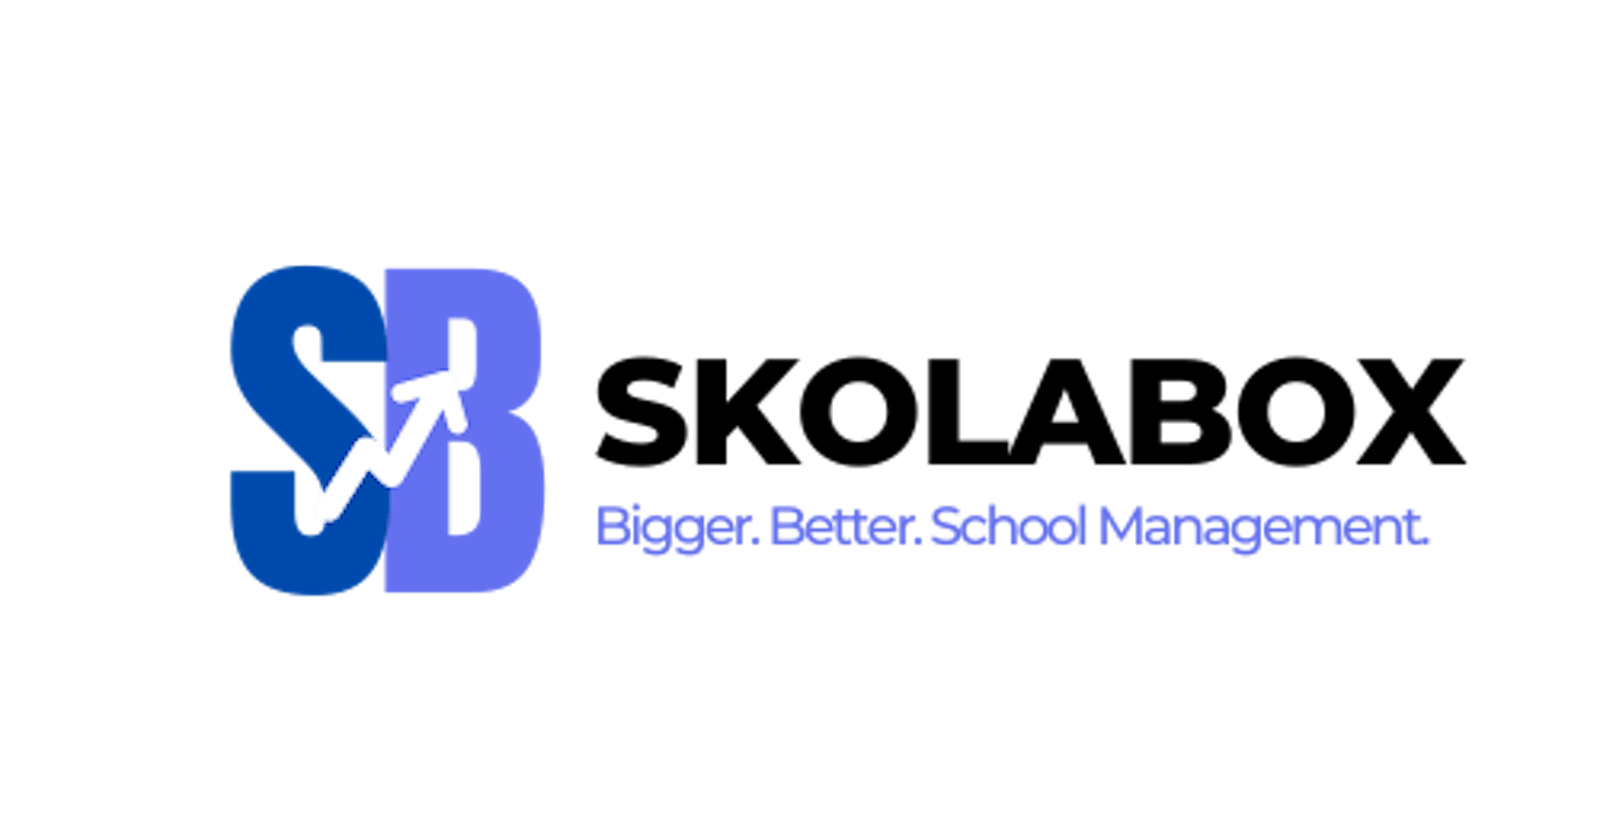 Introducing Skolabox